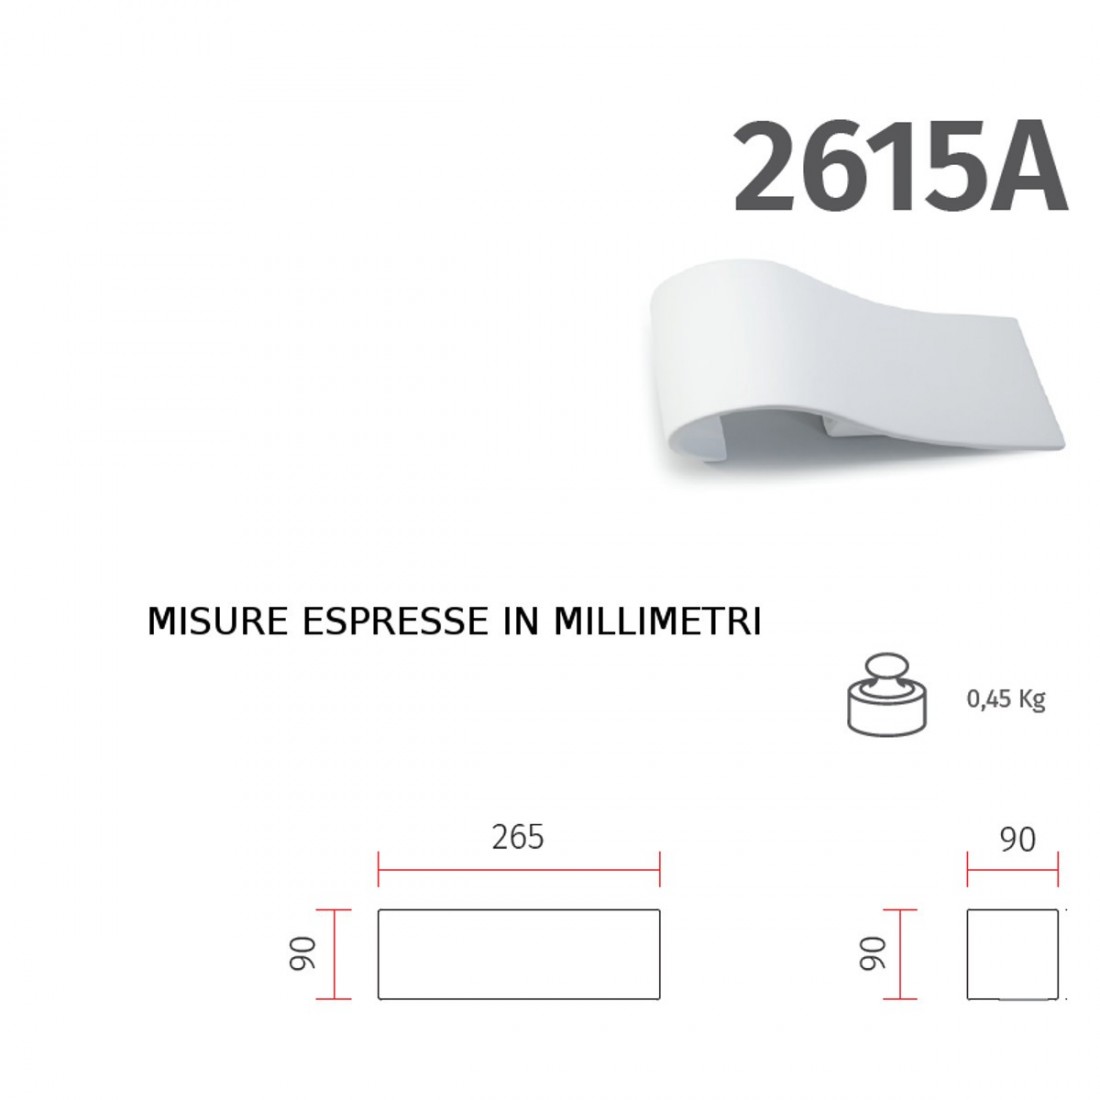 Applique BF-2615A G9 LED gesso bianco verniciabile fascia lampada parete interno IP20